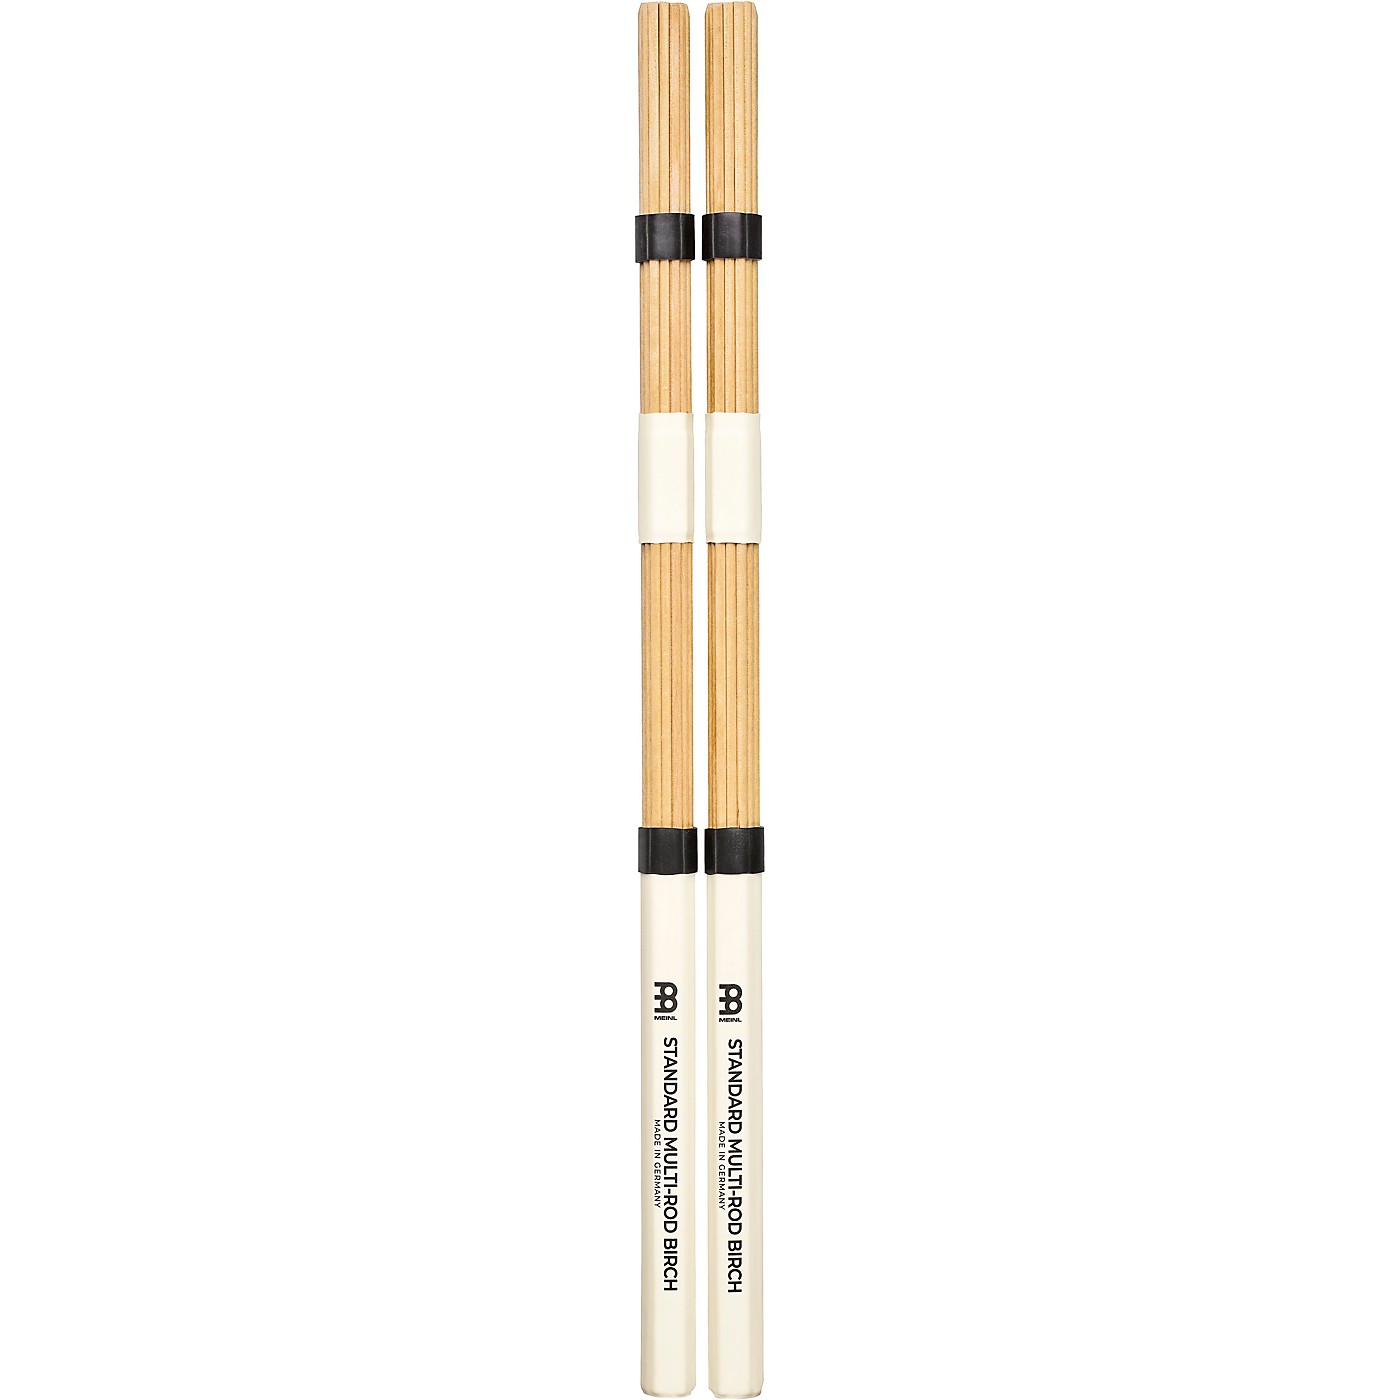 Meinl Stick & Brush Birch Standard Multi-Rods thumbnail